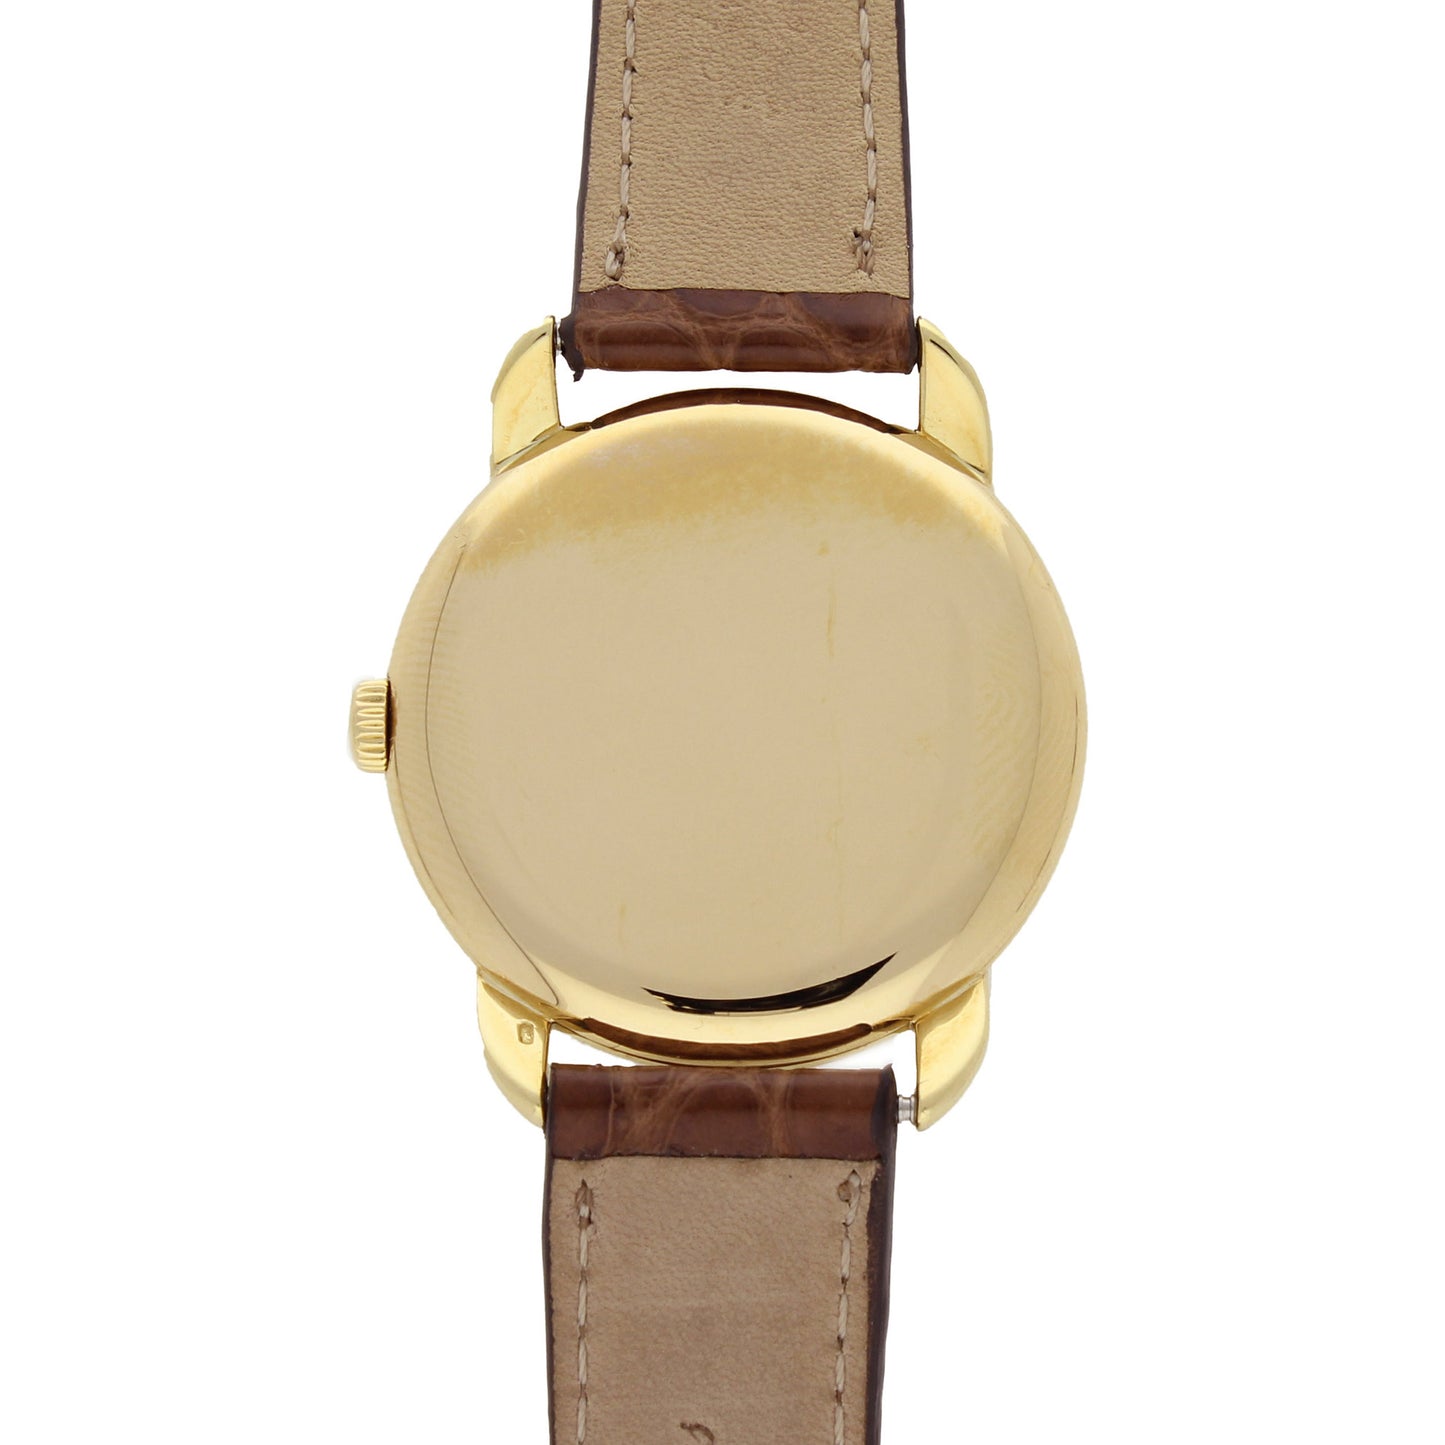 18ct yellow gold, reference 2536 Calatrava wristwatch. Made 1955